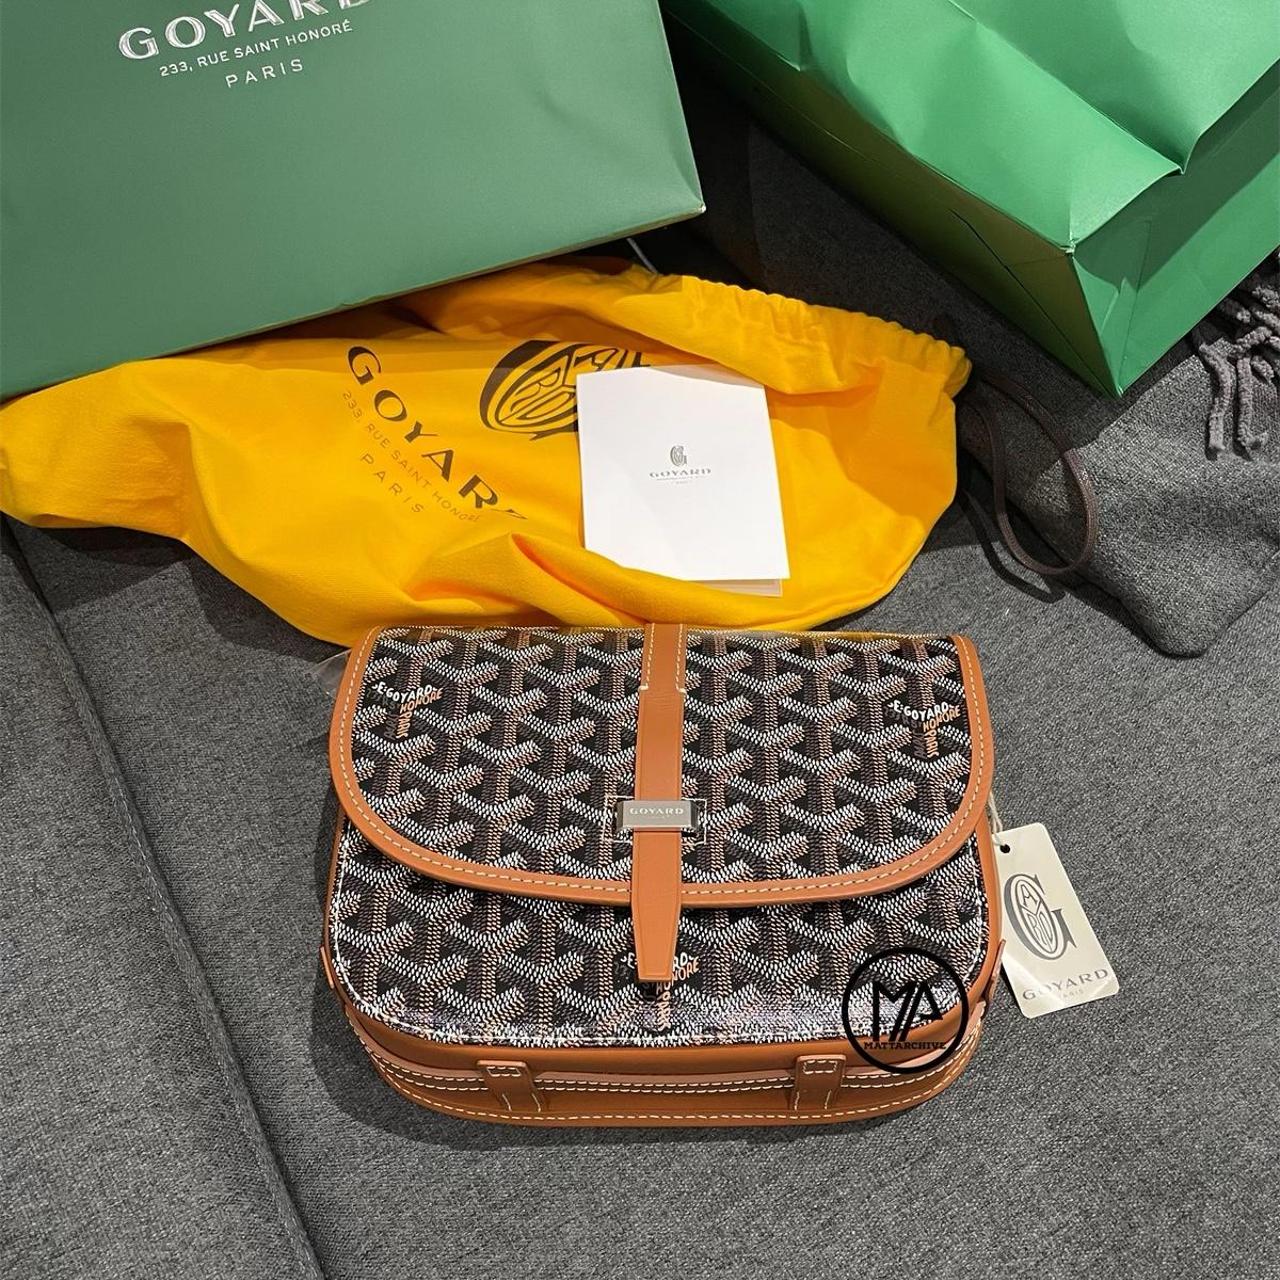 Goyard Belvedere PM bag Used a few times - Depop